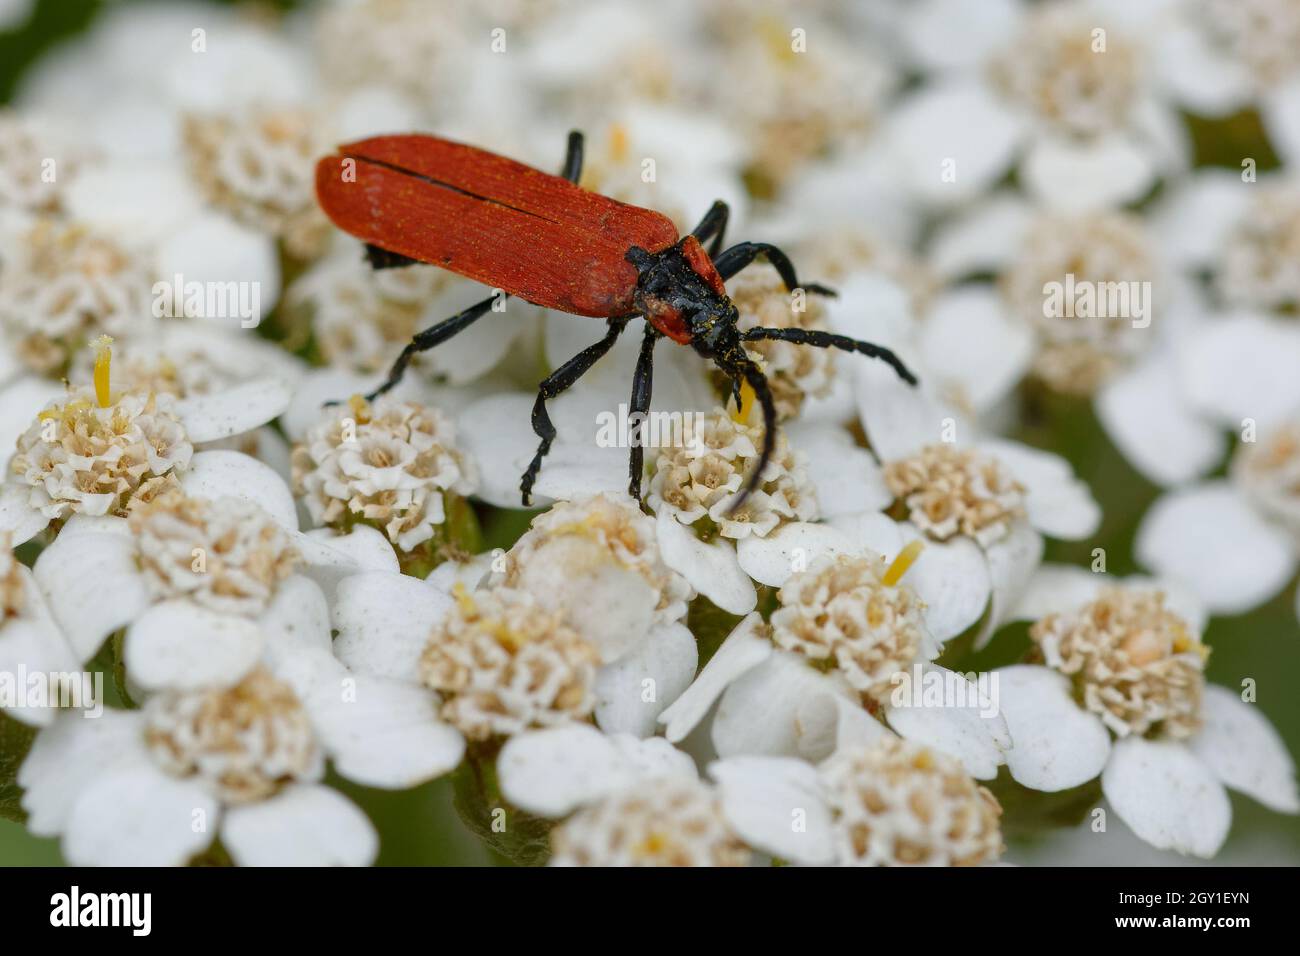 Net-winged beetle (Lygistopterus sanguineus) on flowers Stock Photo